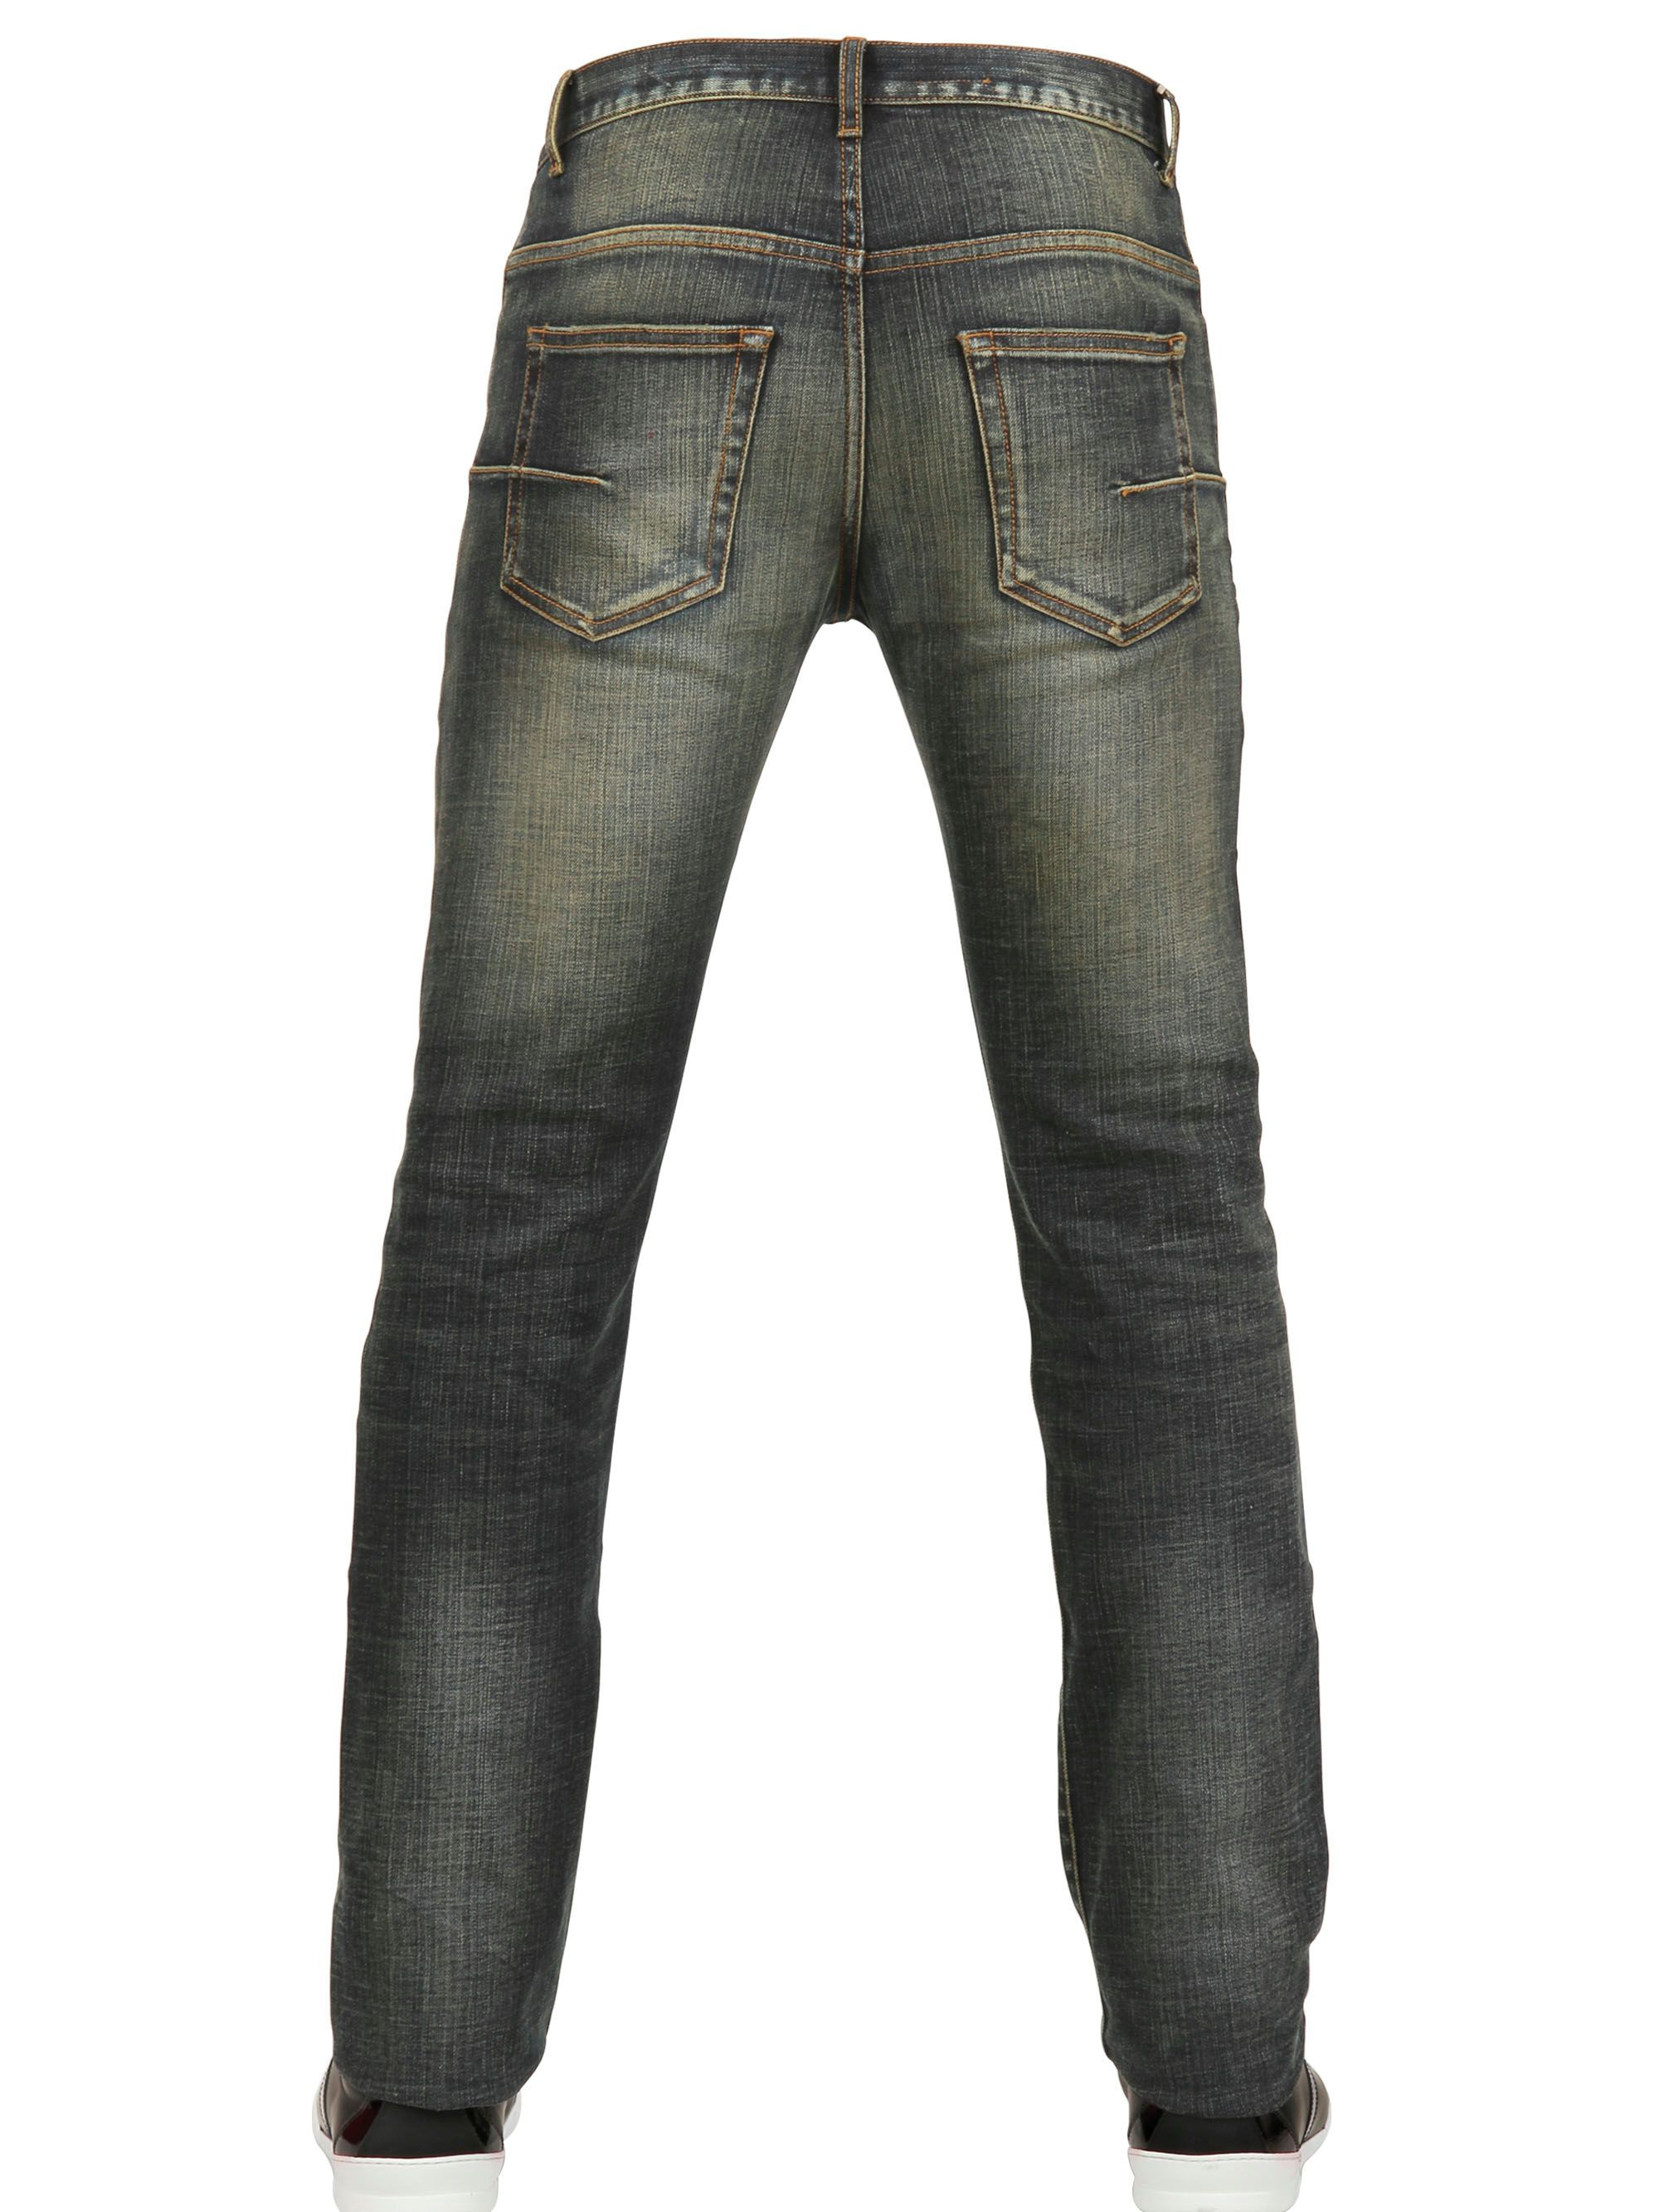 Lyst - Dior homme 19cm Jake Stretch Denim Jeans in Blue for Men